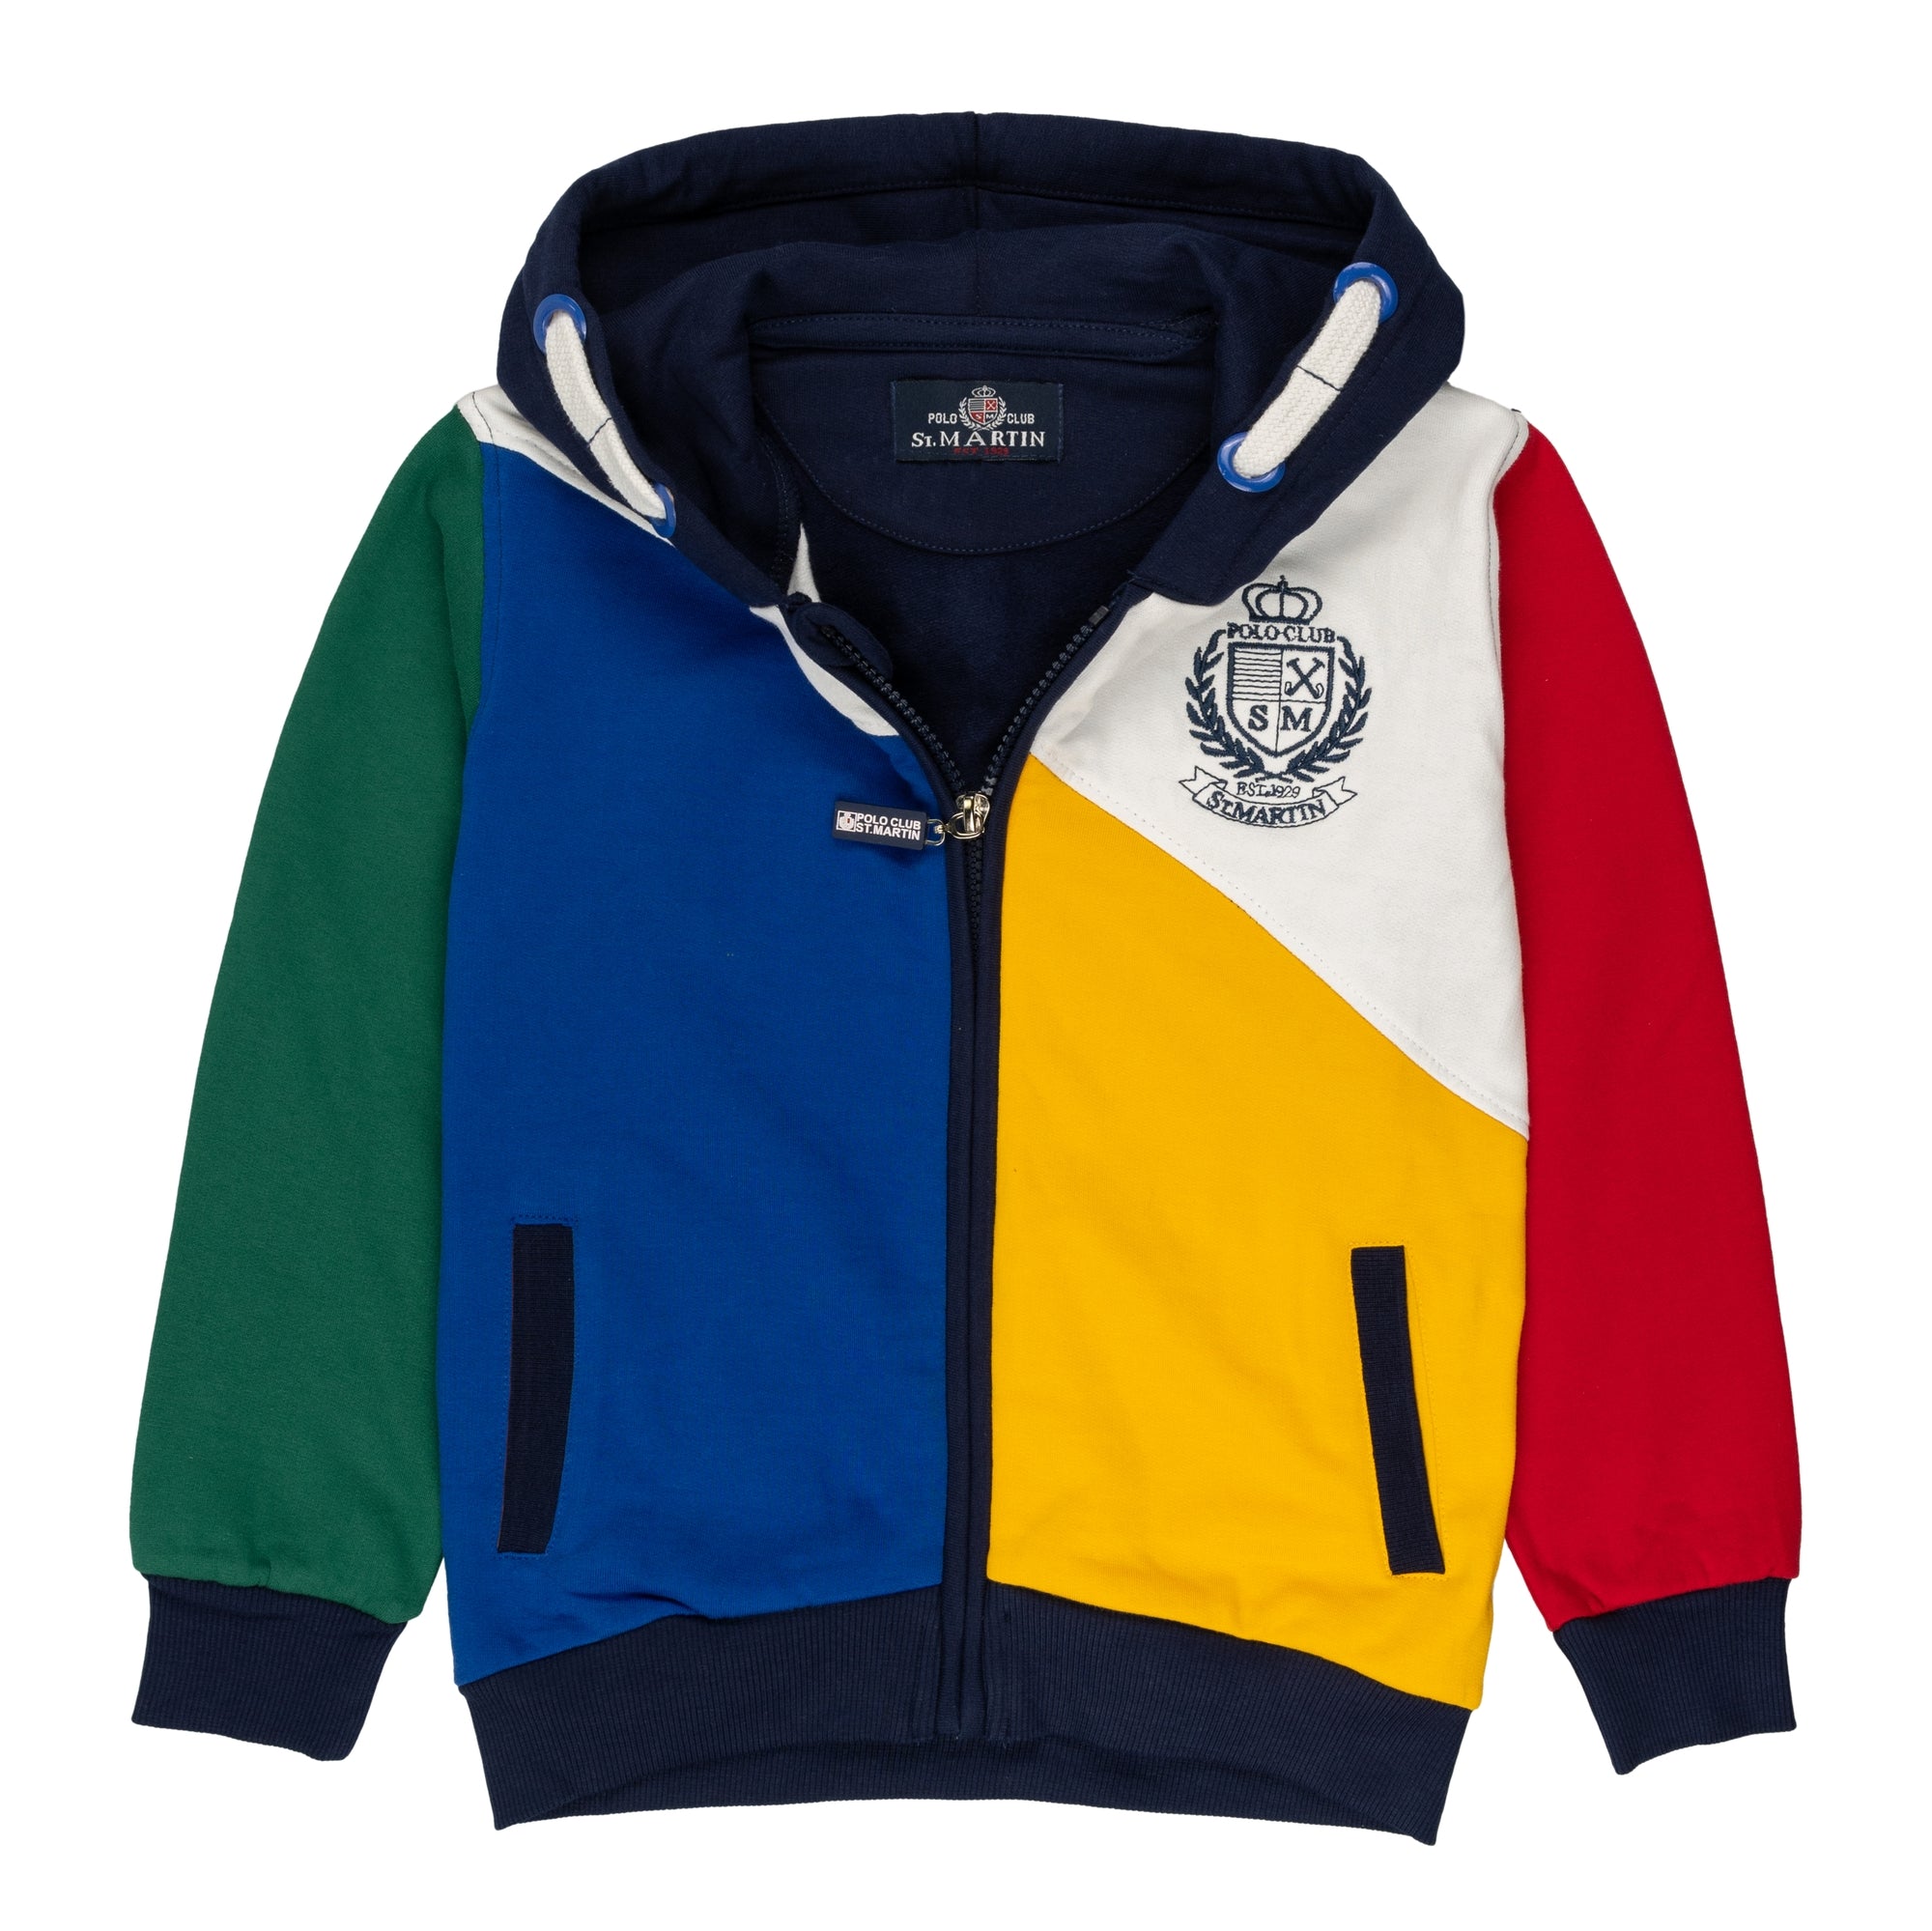 Multicolor hooded sweatshirt